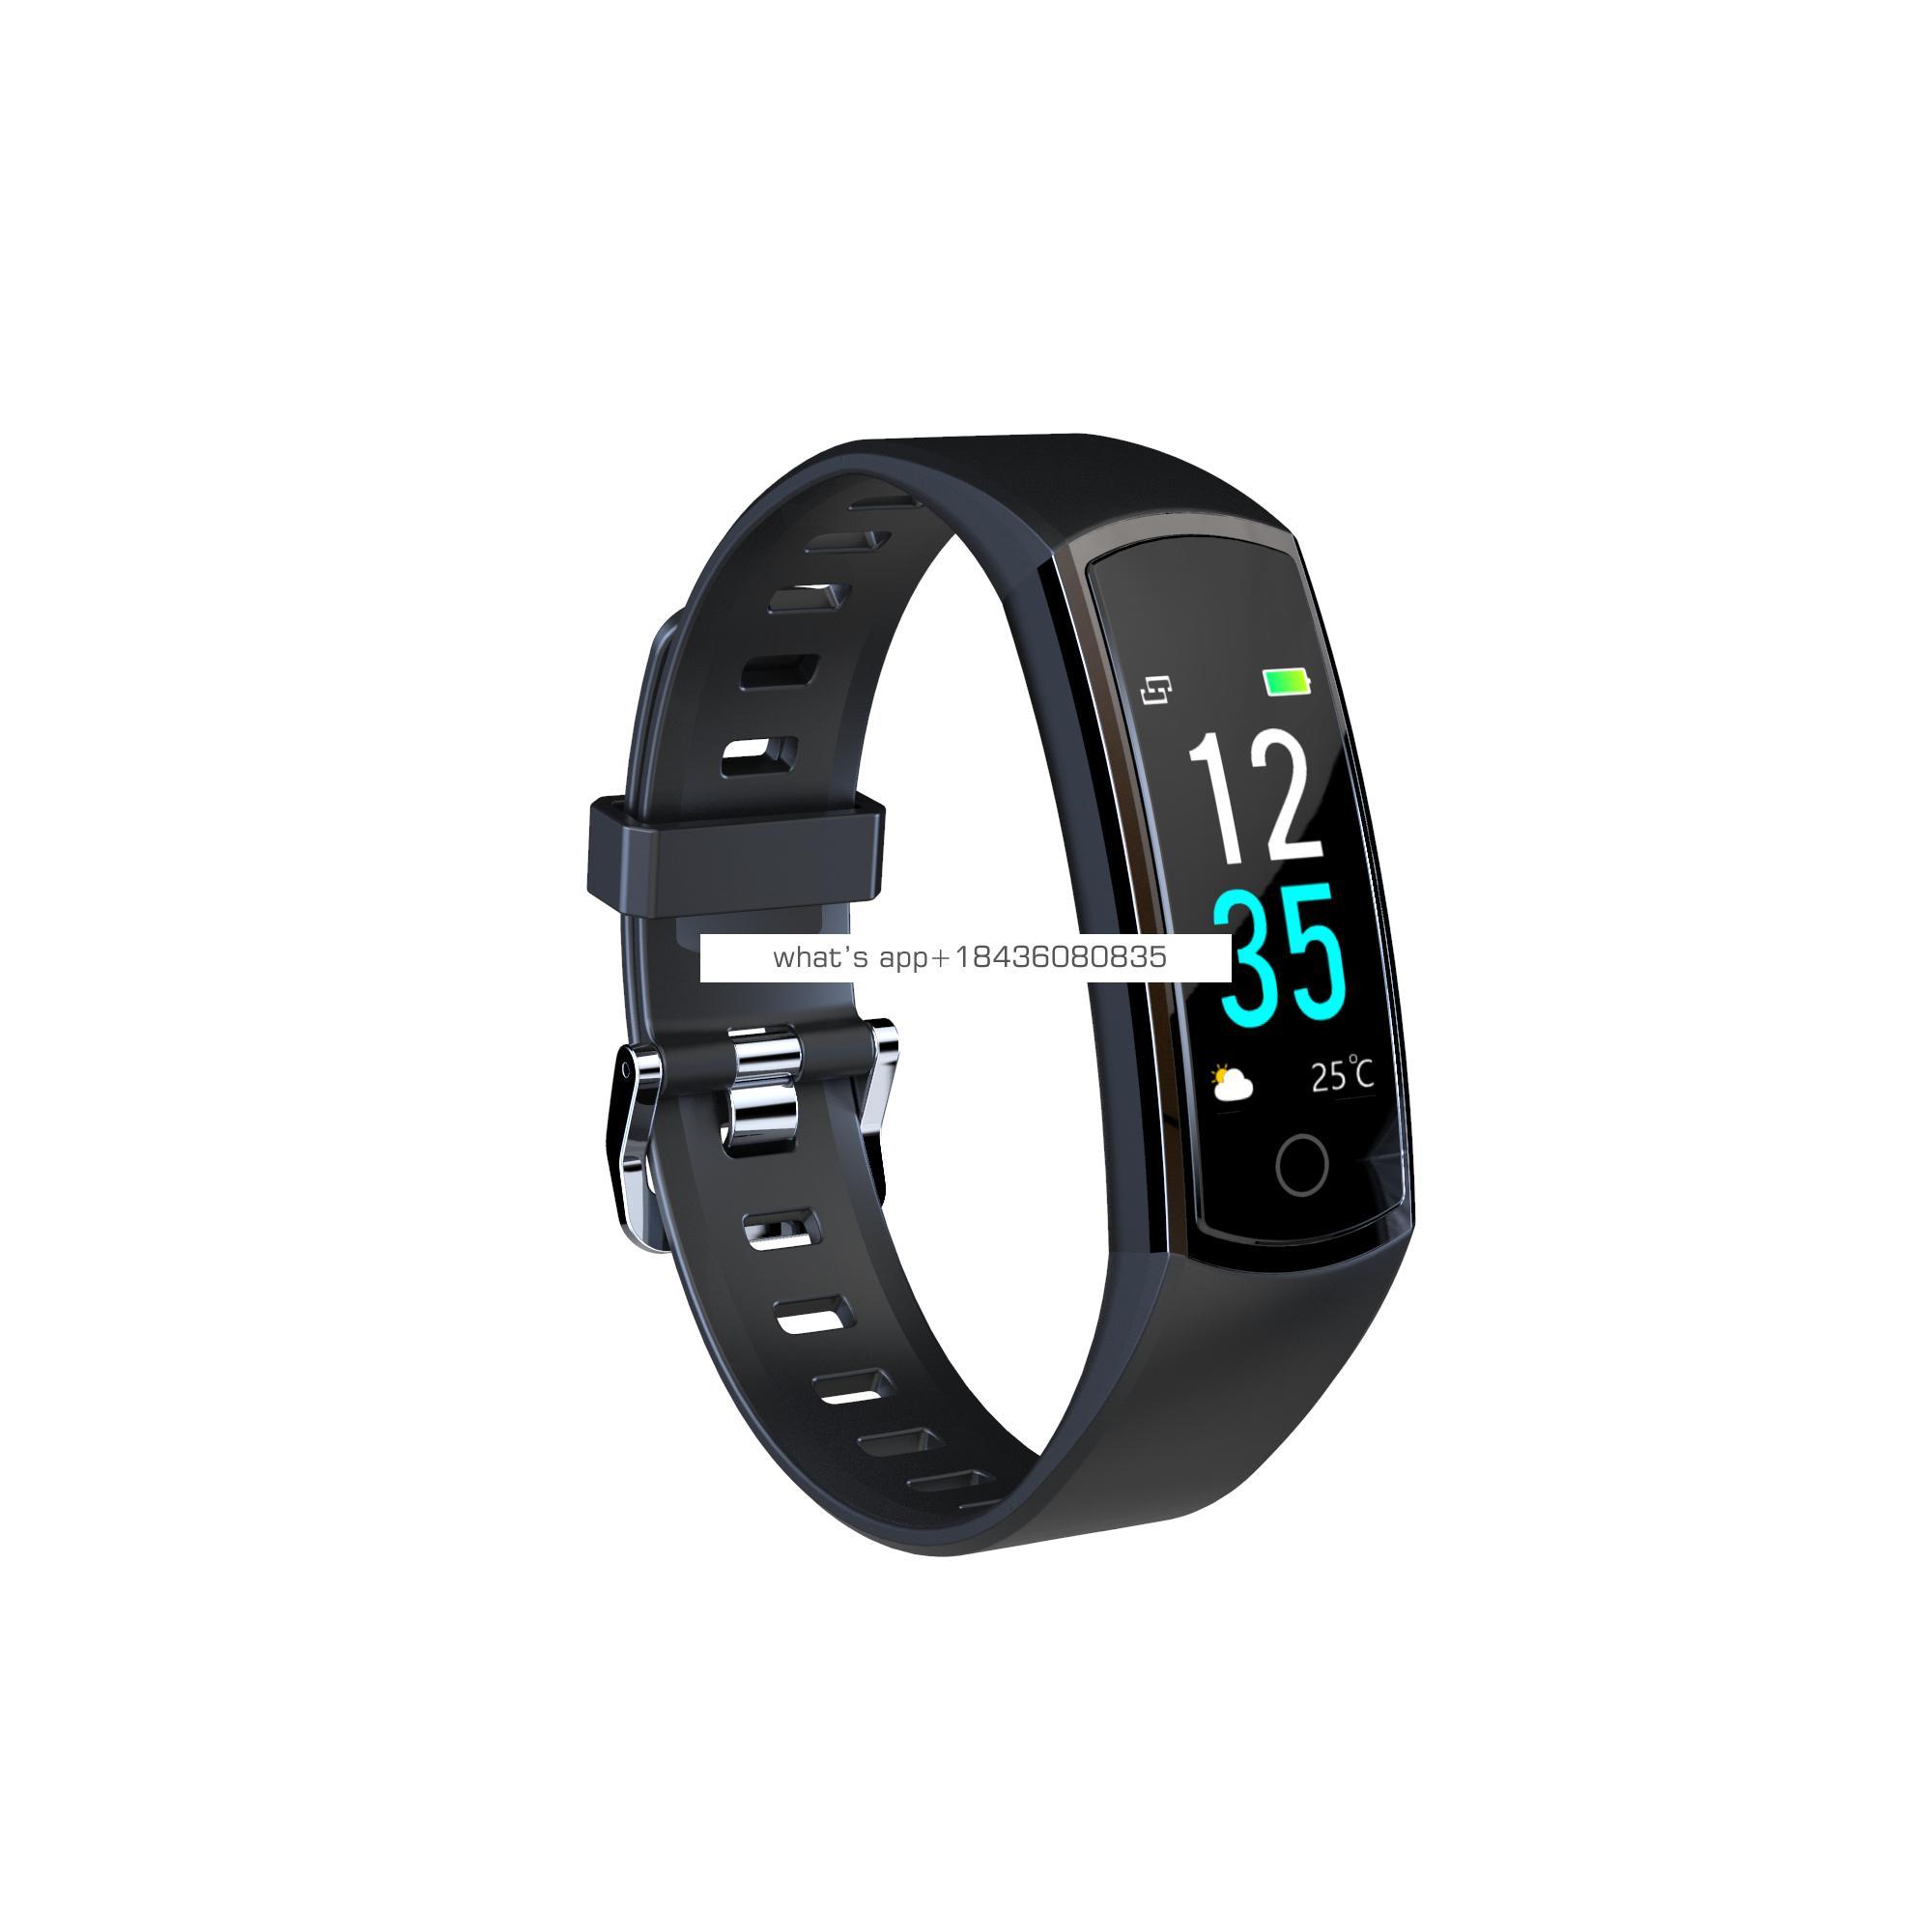 reloj smart android healthy sport smart watch fitness bracelet OLED display for women